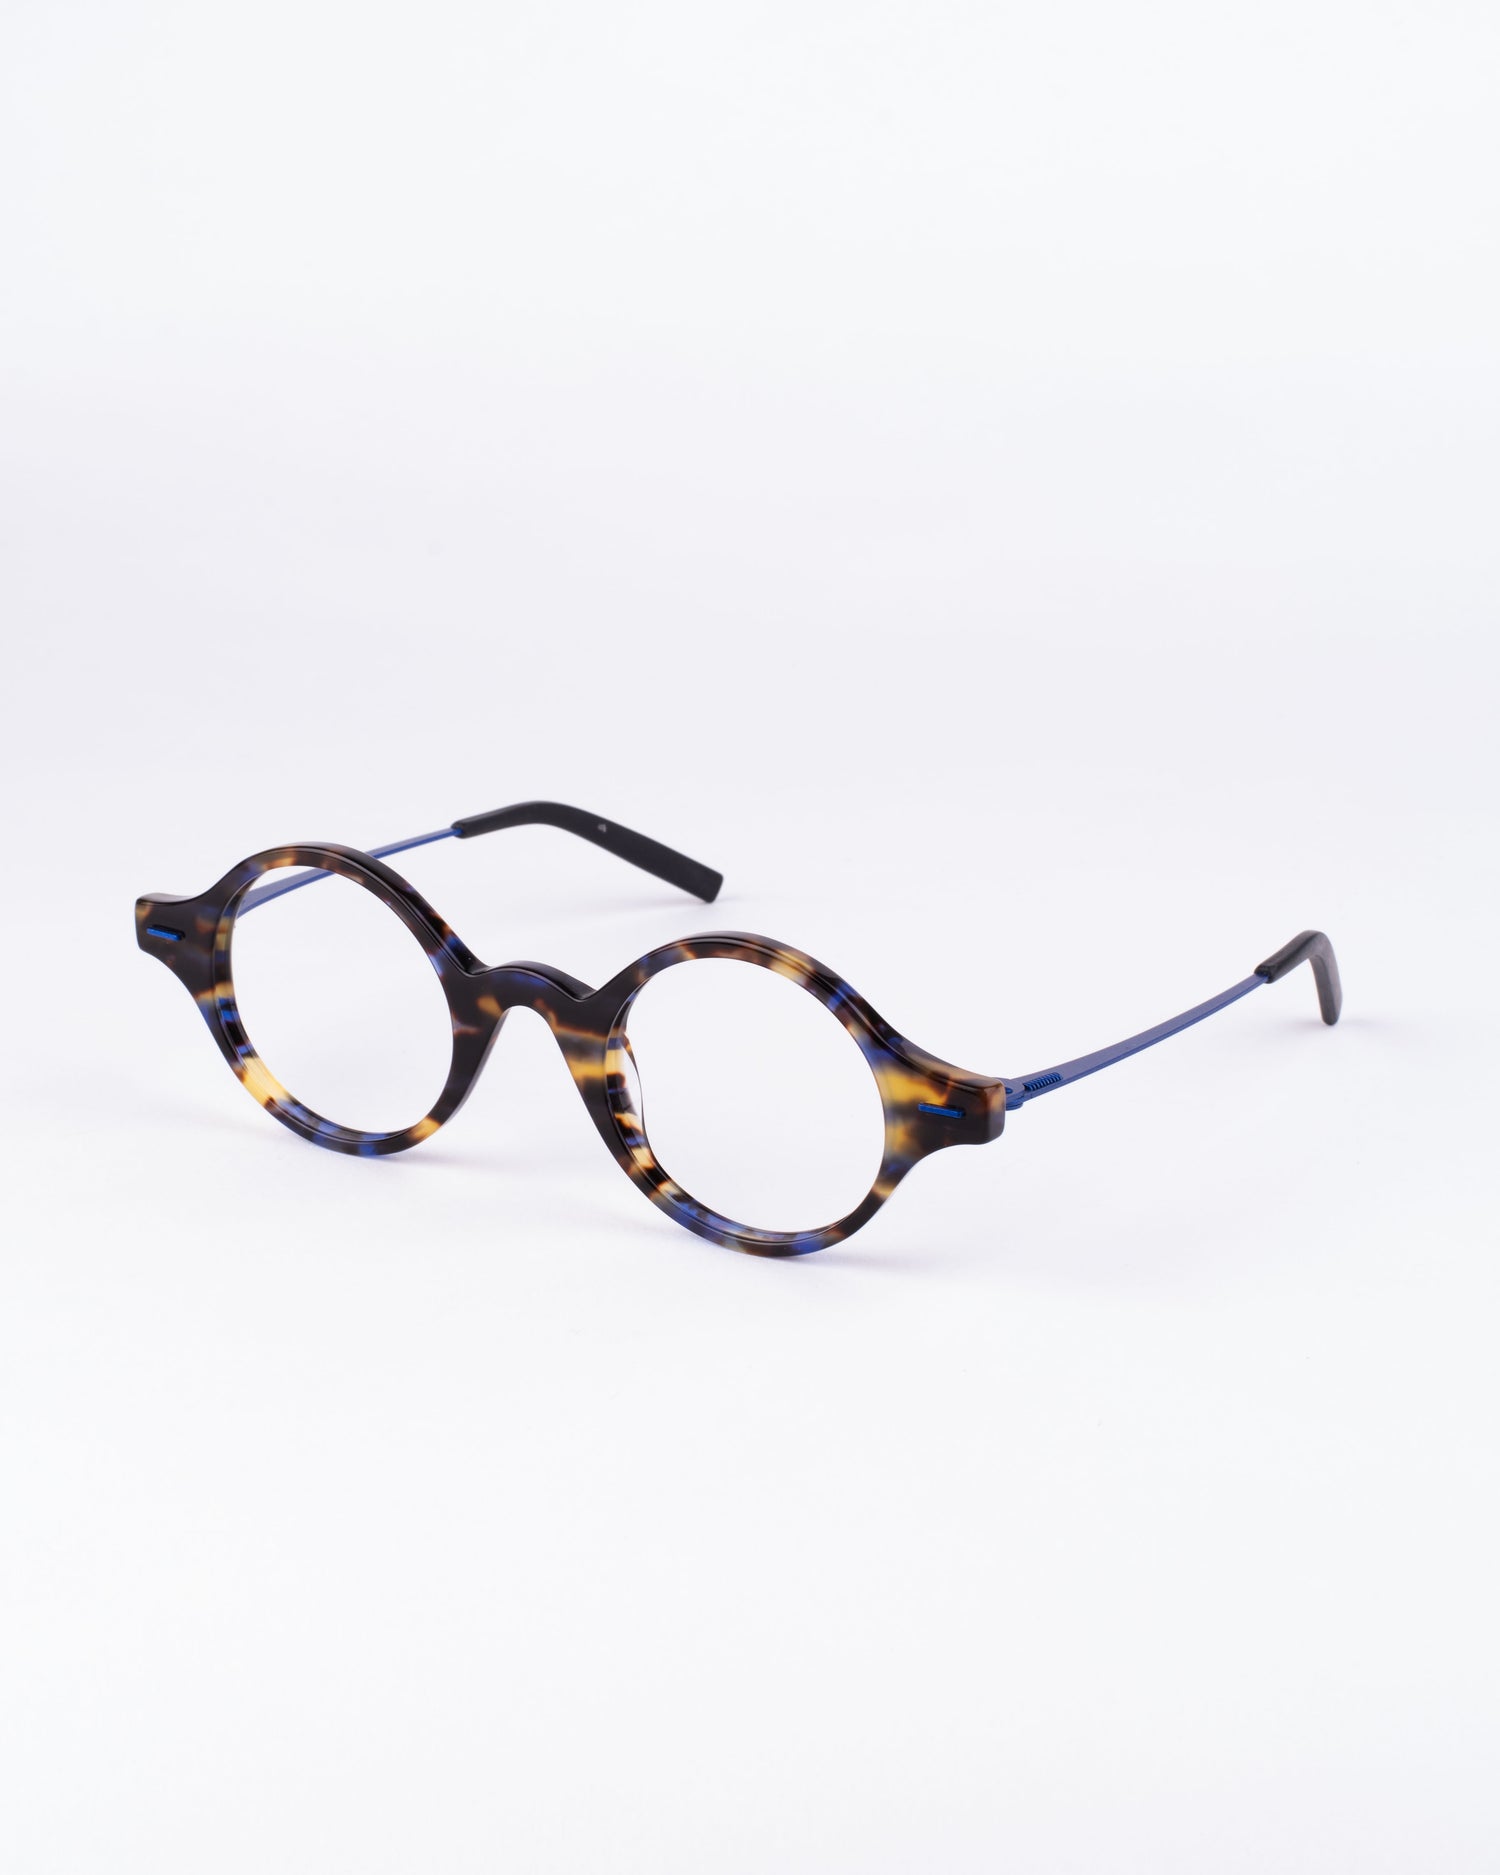 Theo - Aartappel - 15 | glasses bar:  Marie-Sophie Dion